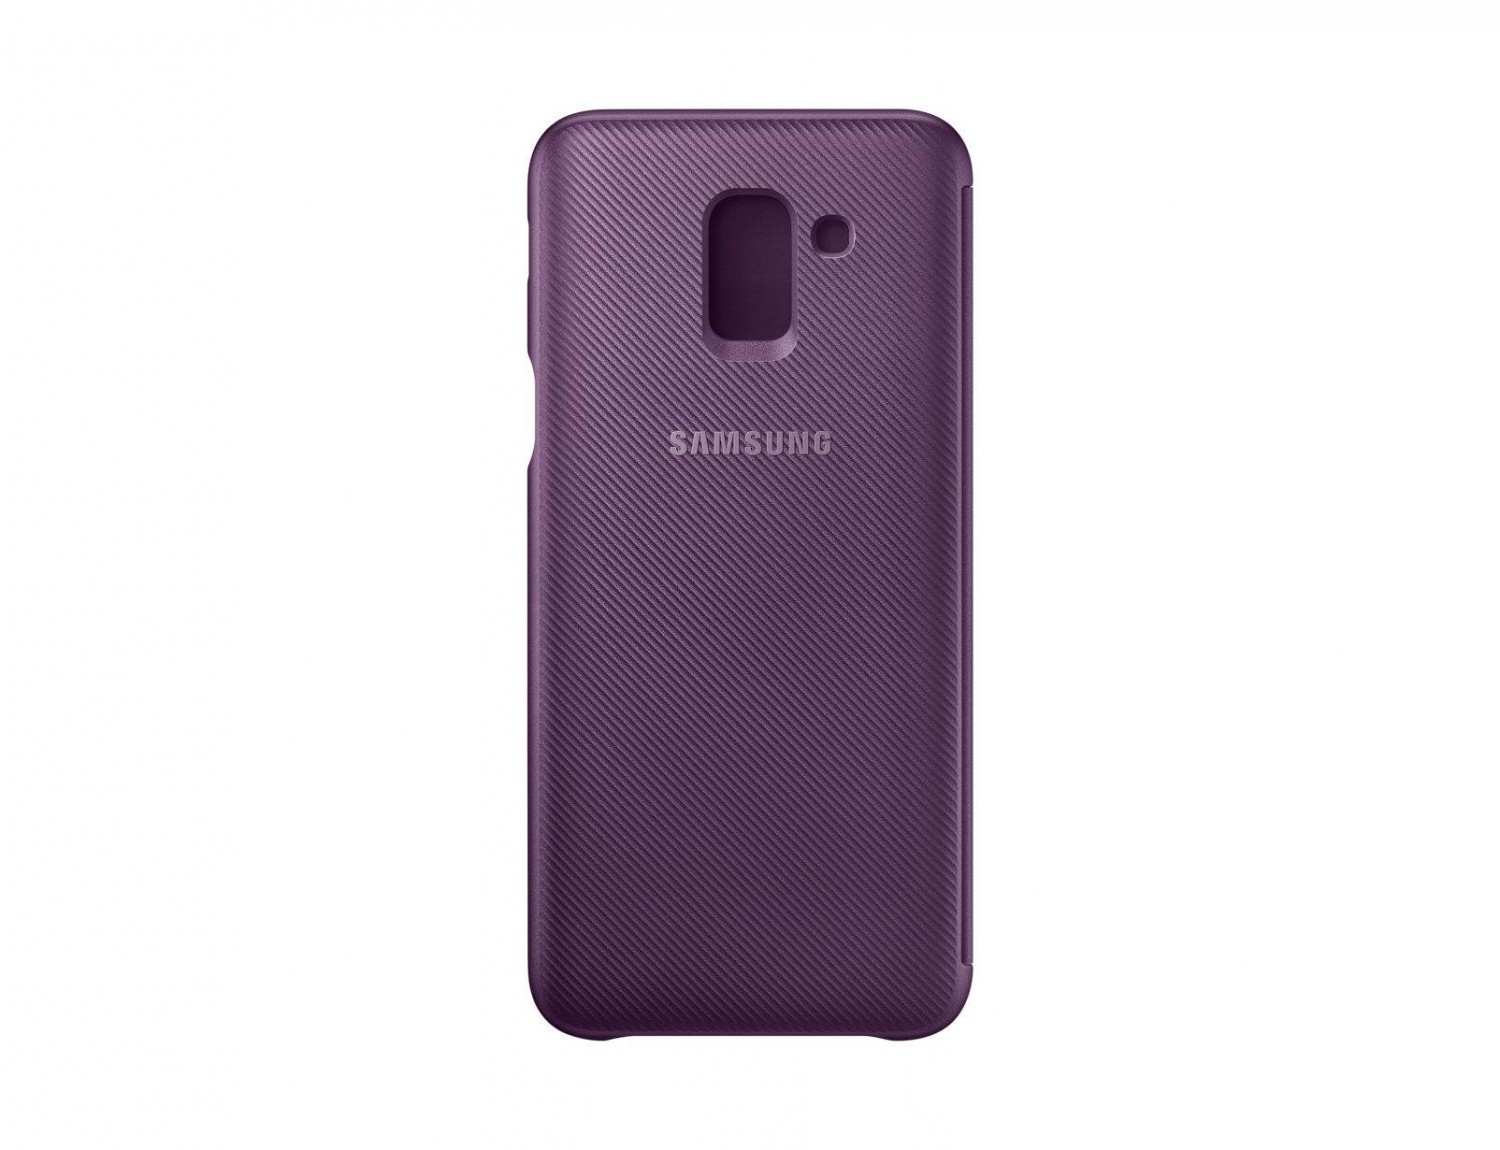 EF-WJ600CEE Samsung Folio Pouzdro Purple pro Galaxy J6 2018 (EU Blister)